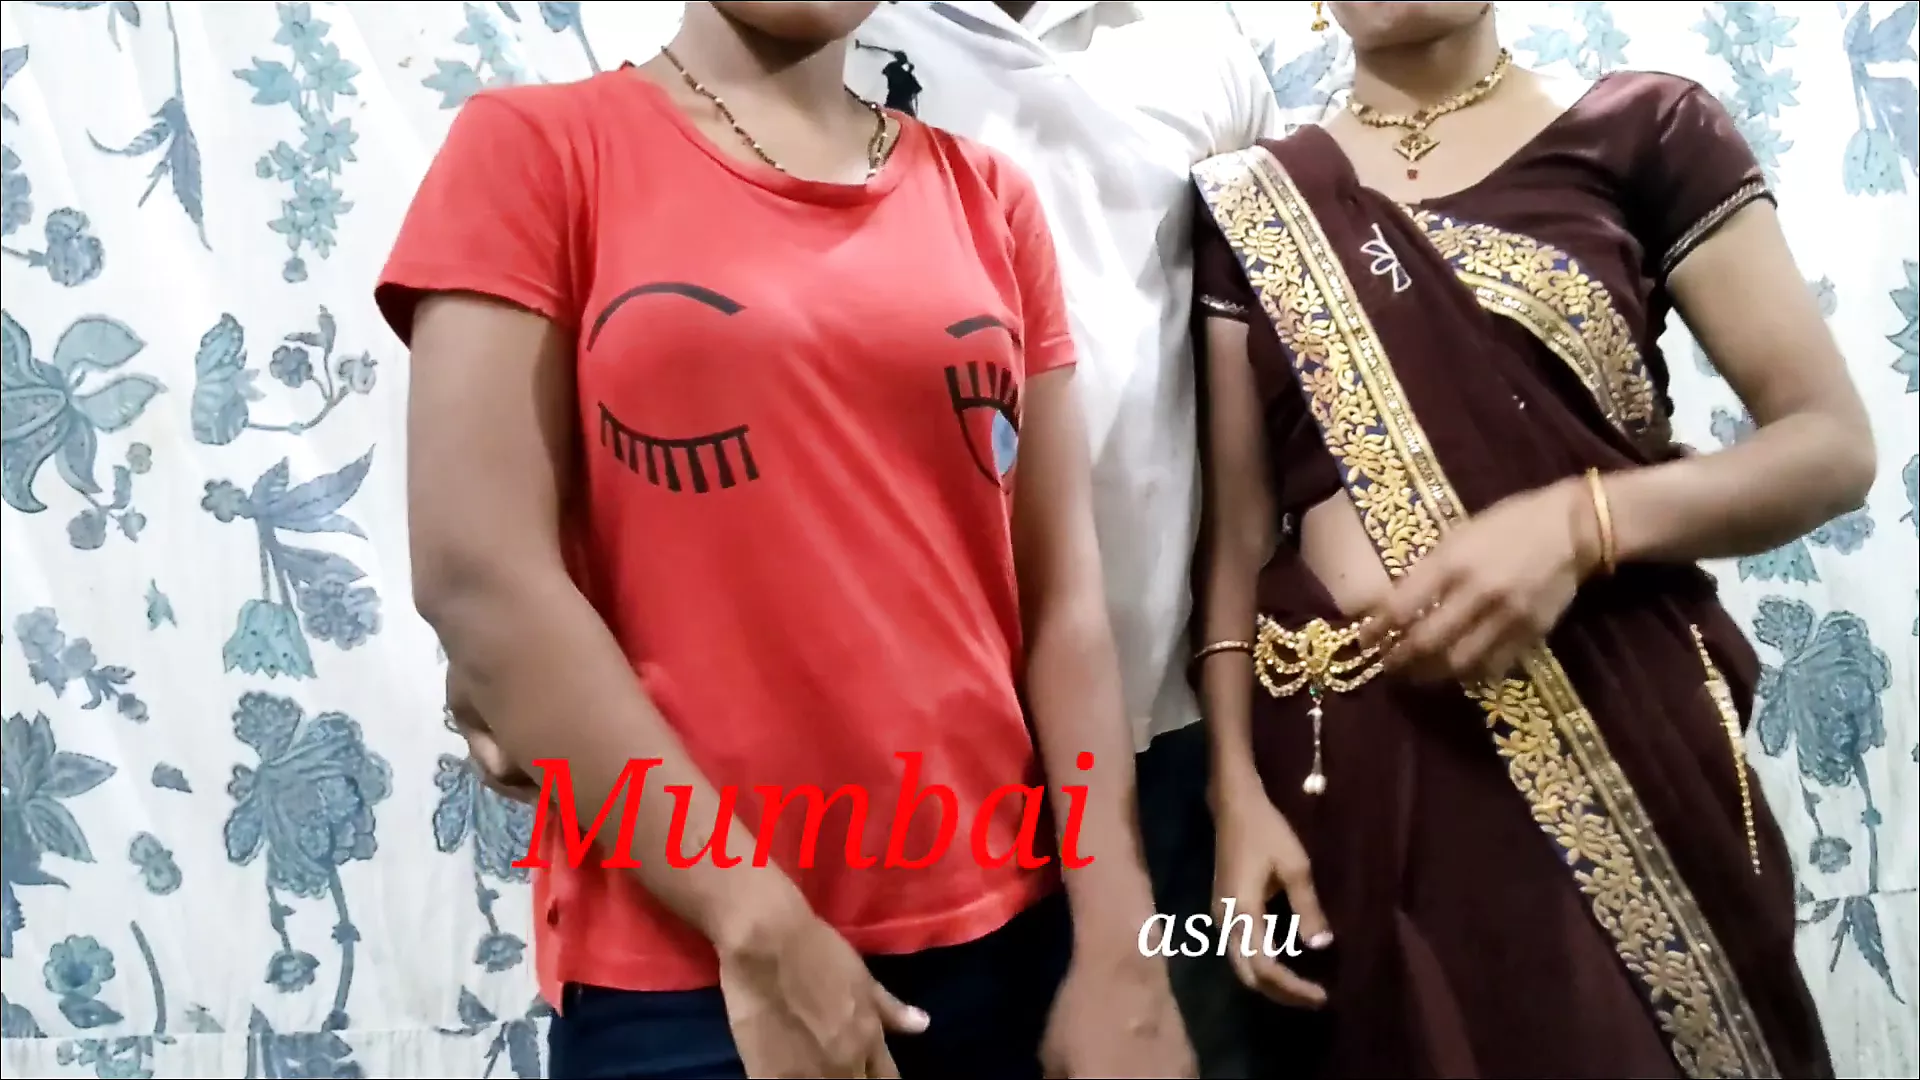 Bombay X Video - Indian Threesome Video Mumbai Ashu Sex Video Anal Sex | xHamster